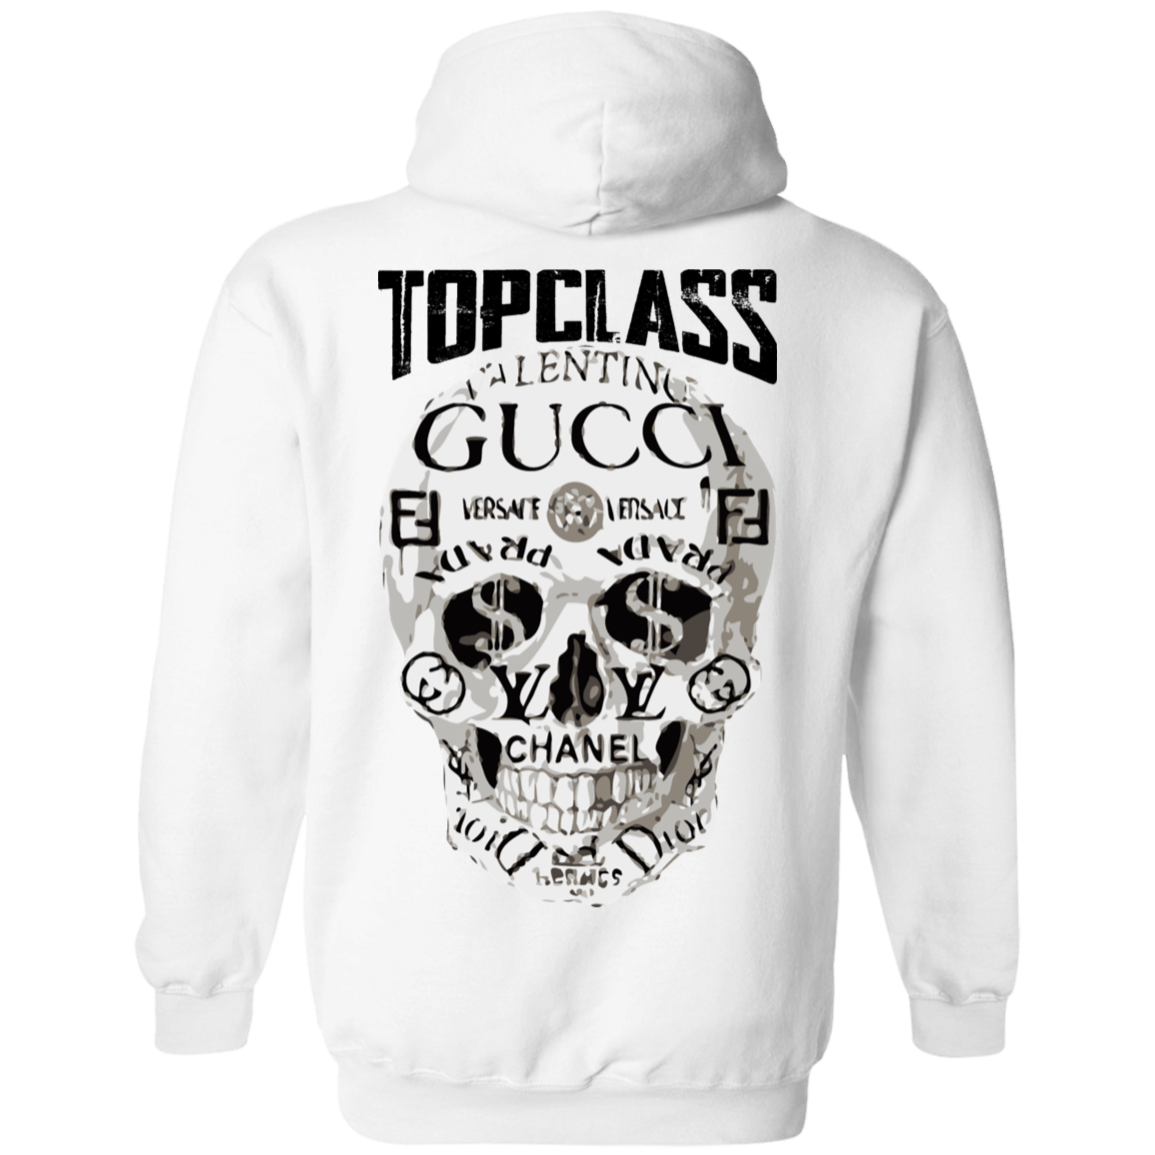 Topclass Gucci Hoodie